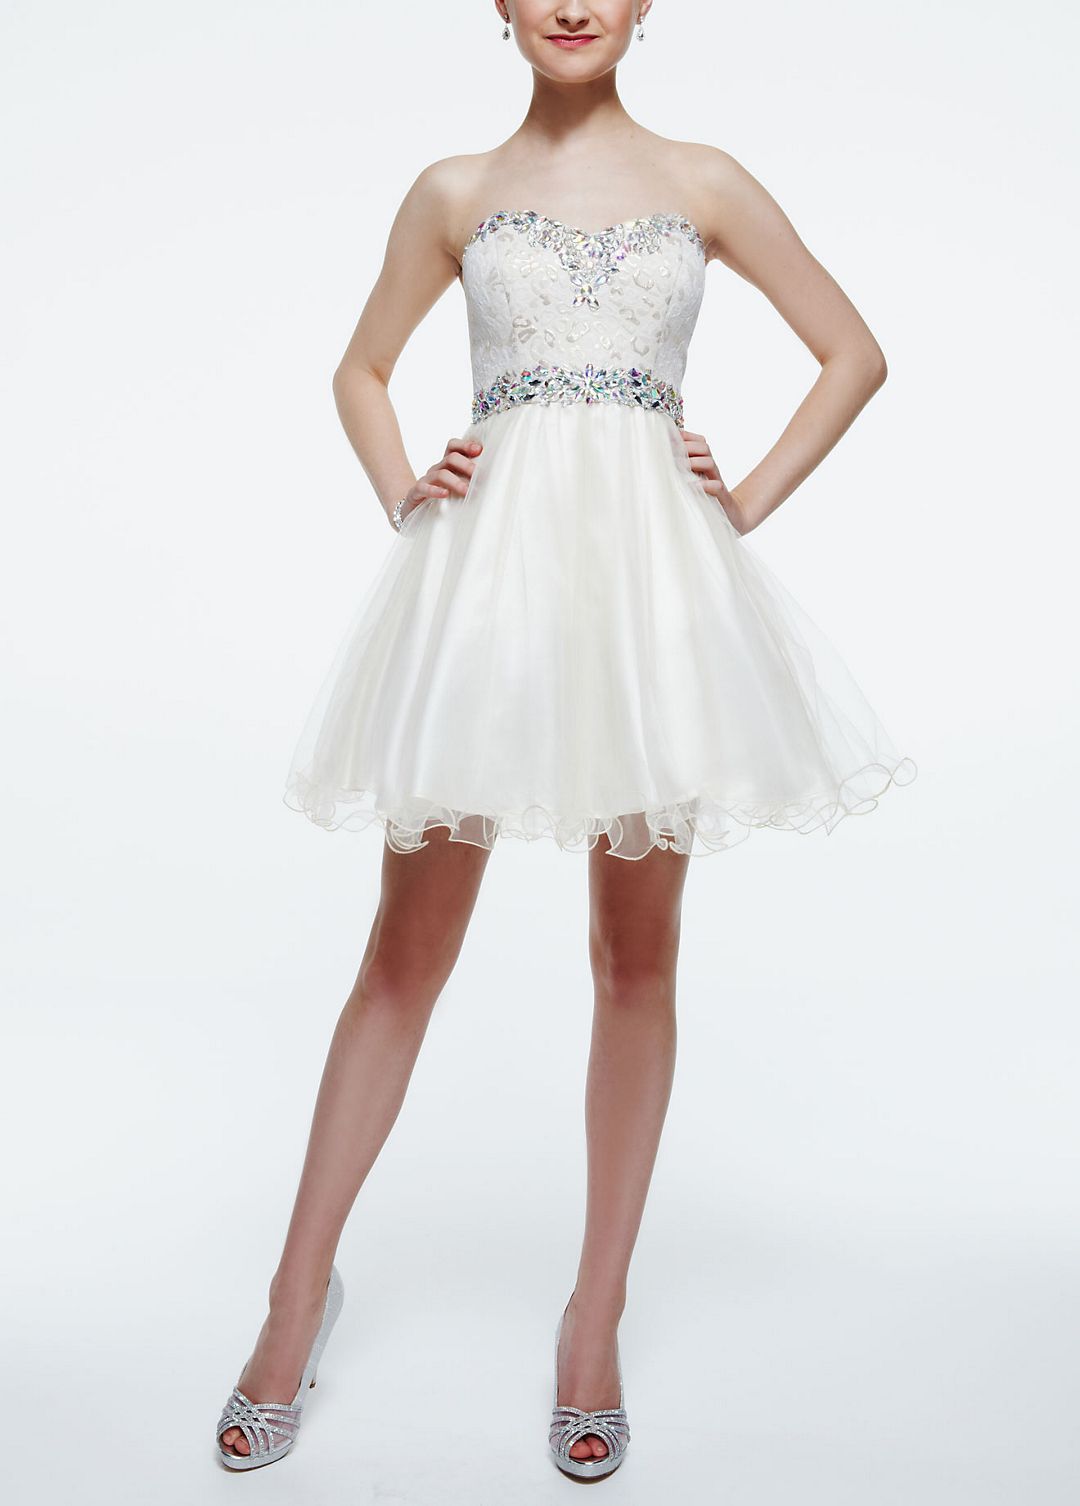 Beaded Sweetheart Neckline Dress with Tulle Skirt Image 1